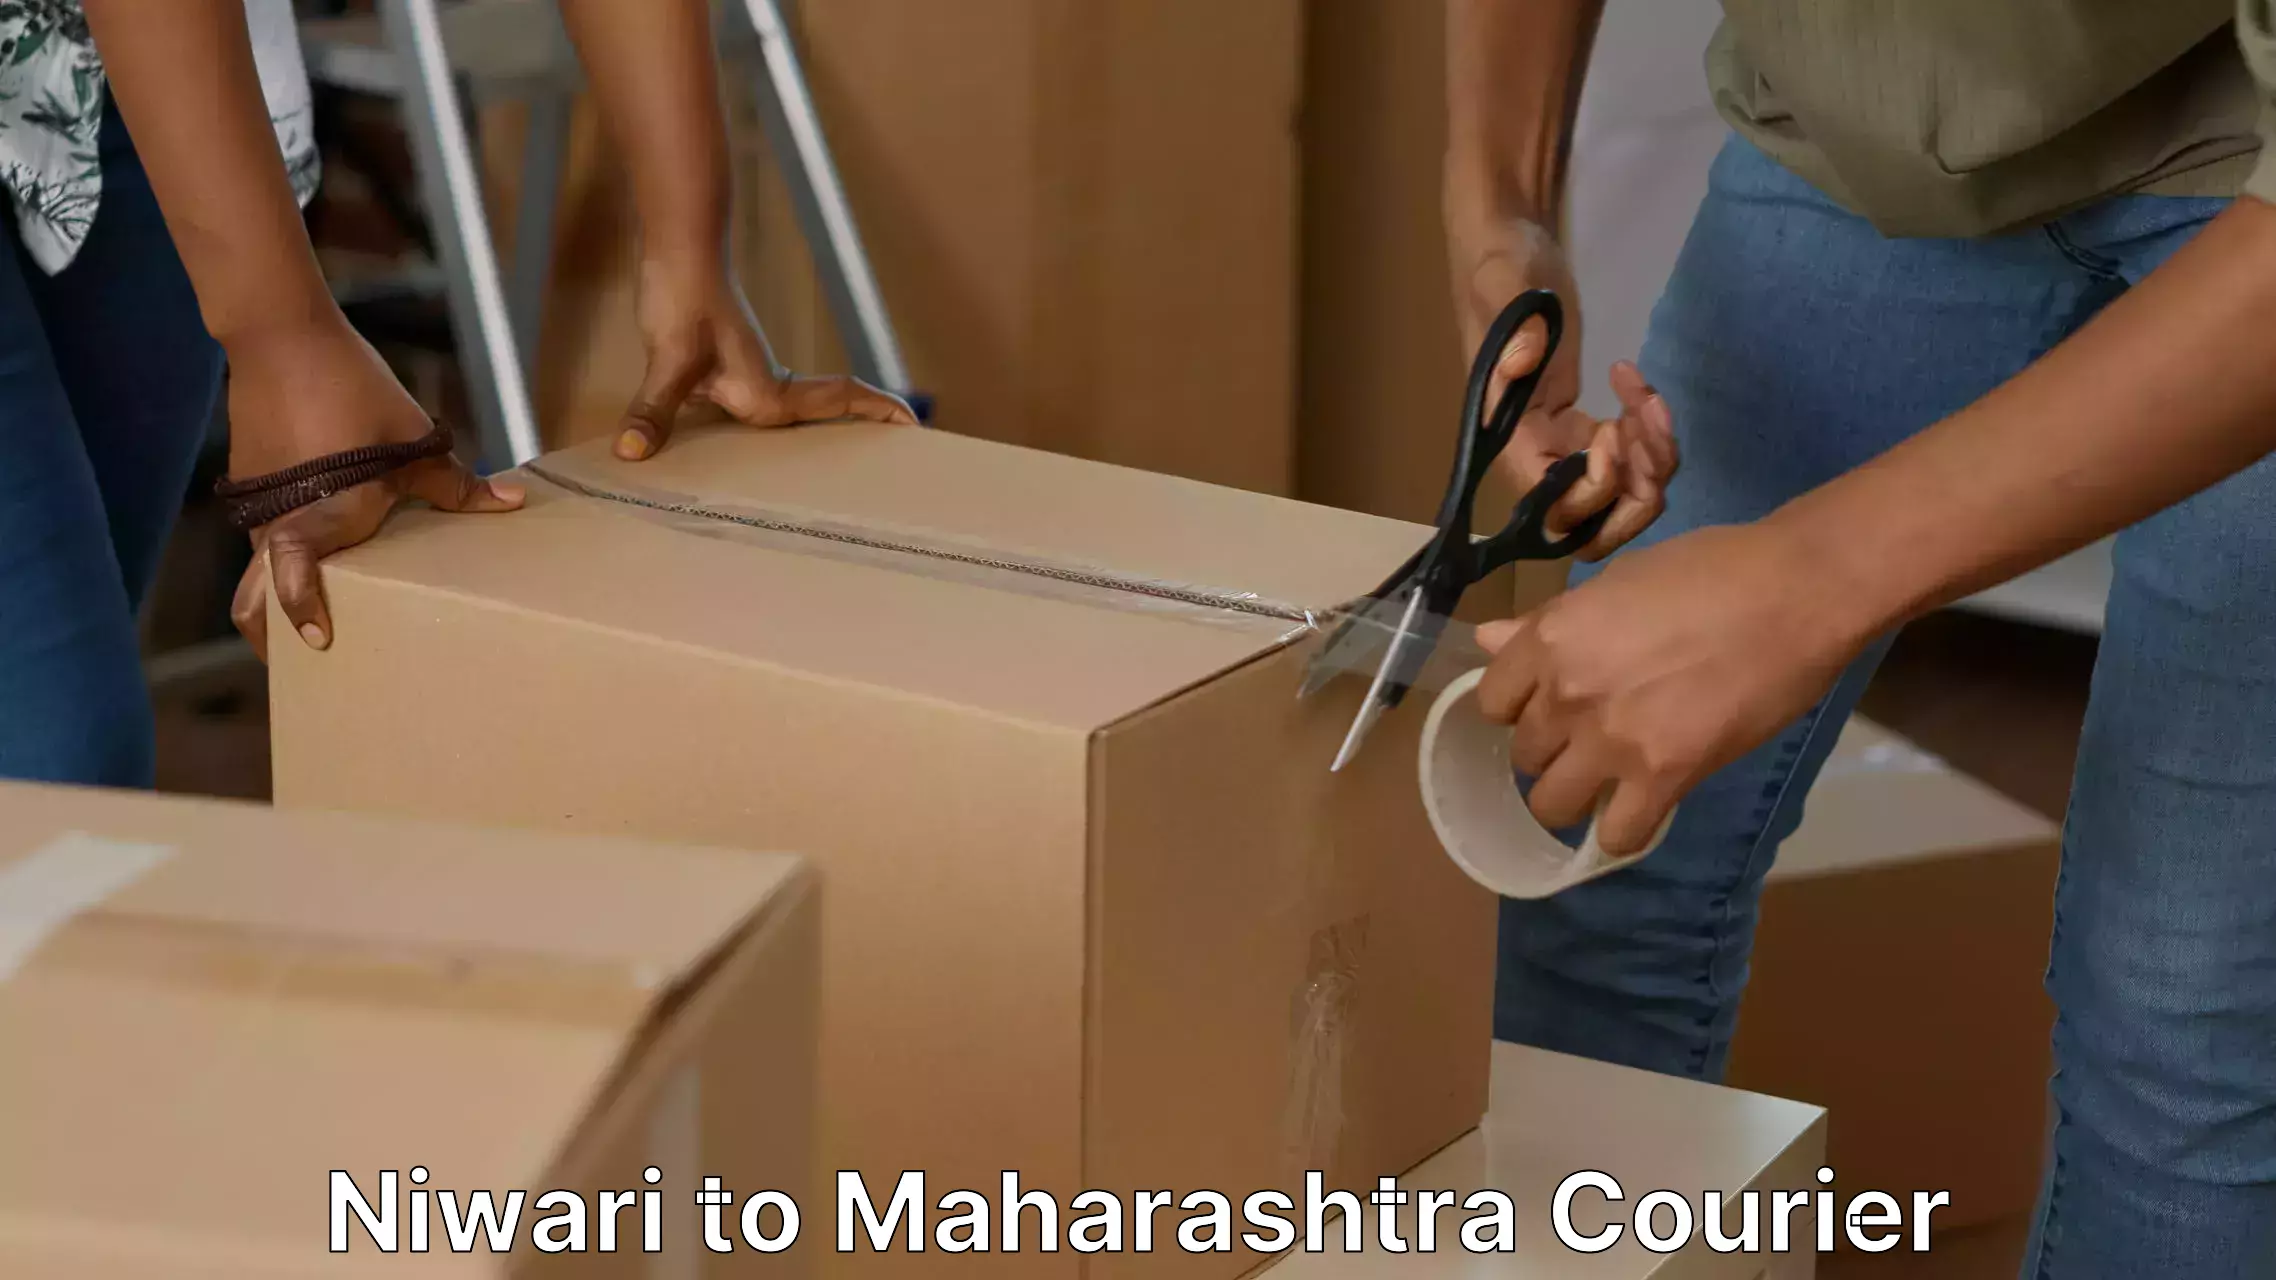 Trusted moving company Niwari to Maharashtra